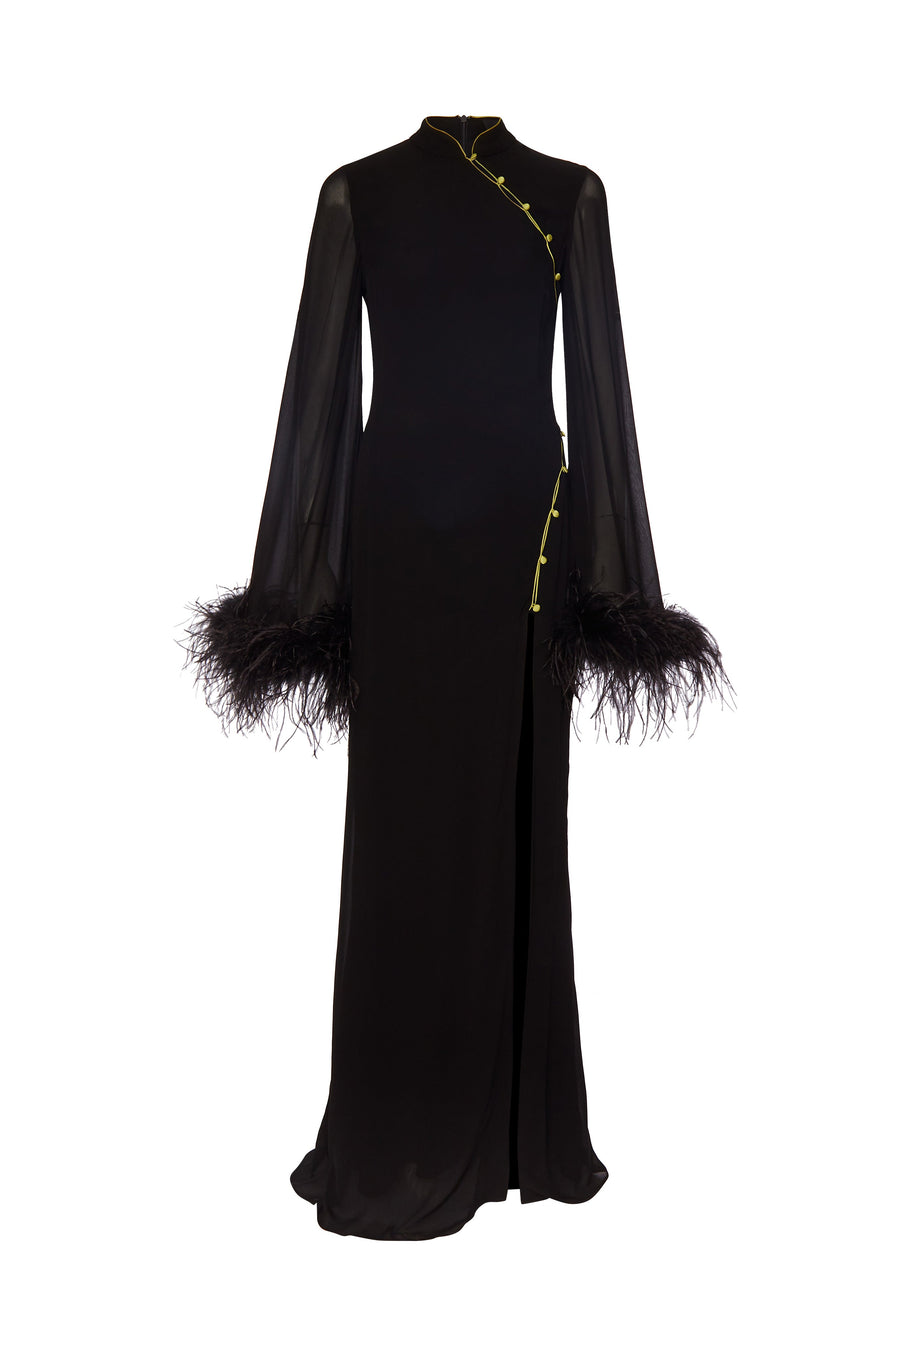 LISA MARIE MAXI DRESS IN BLACK CHIFFON - De La Vali